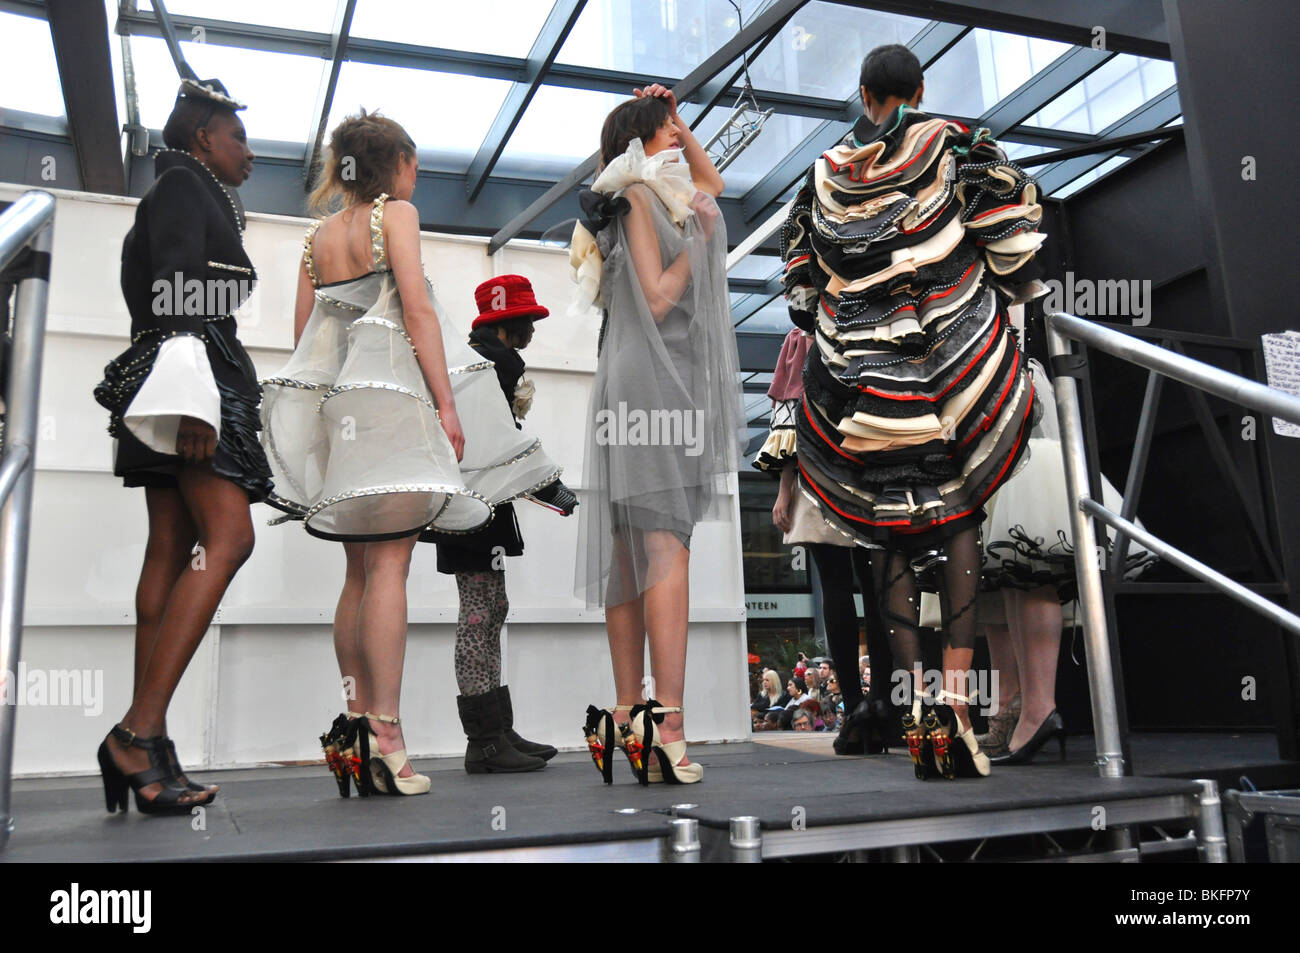 Models wait at London's annual Alternative Fashion Week-Spitalfields. England UK Stock Photo